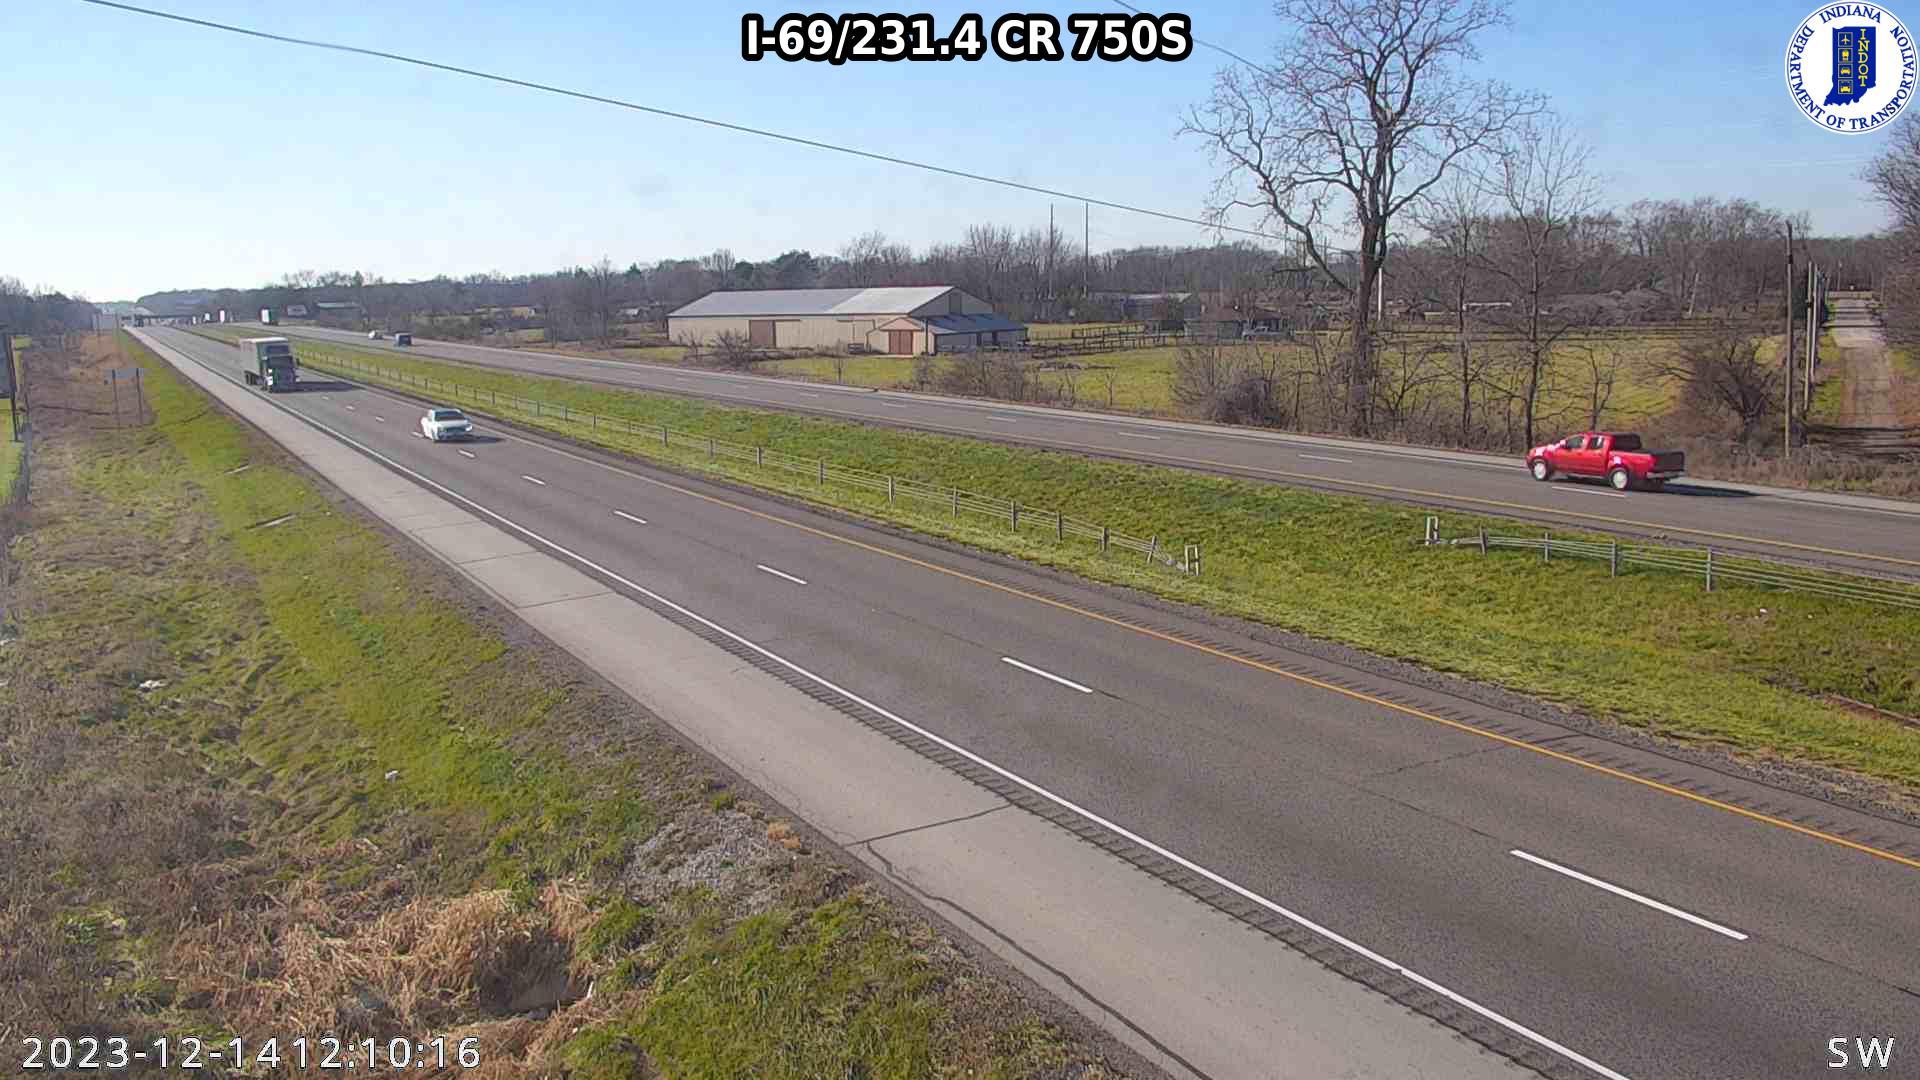 Chesterfield: I-69: I-69/231.4 CR 750S Traffic Camera